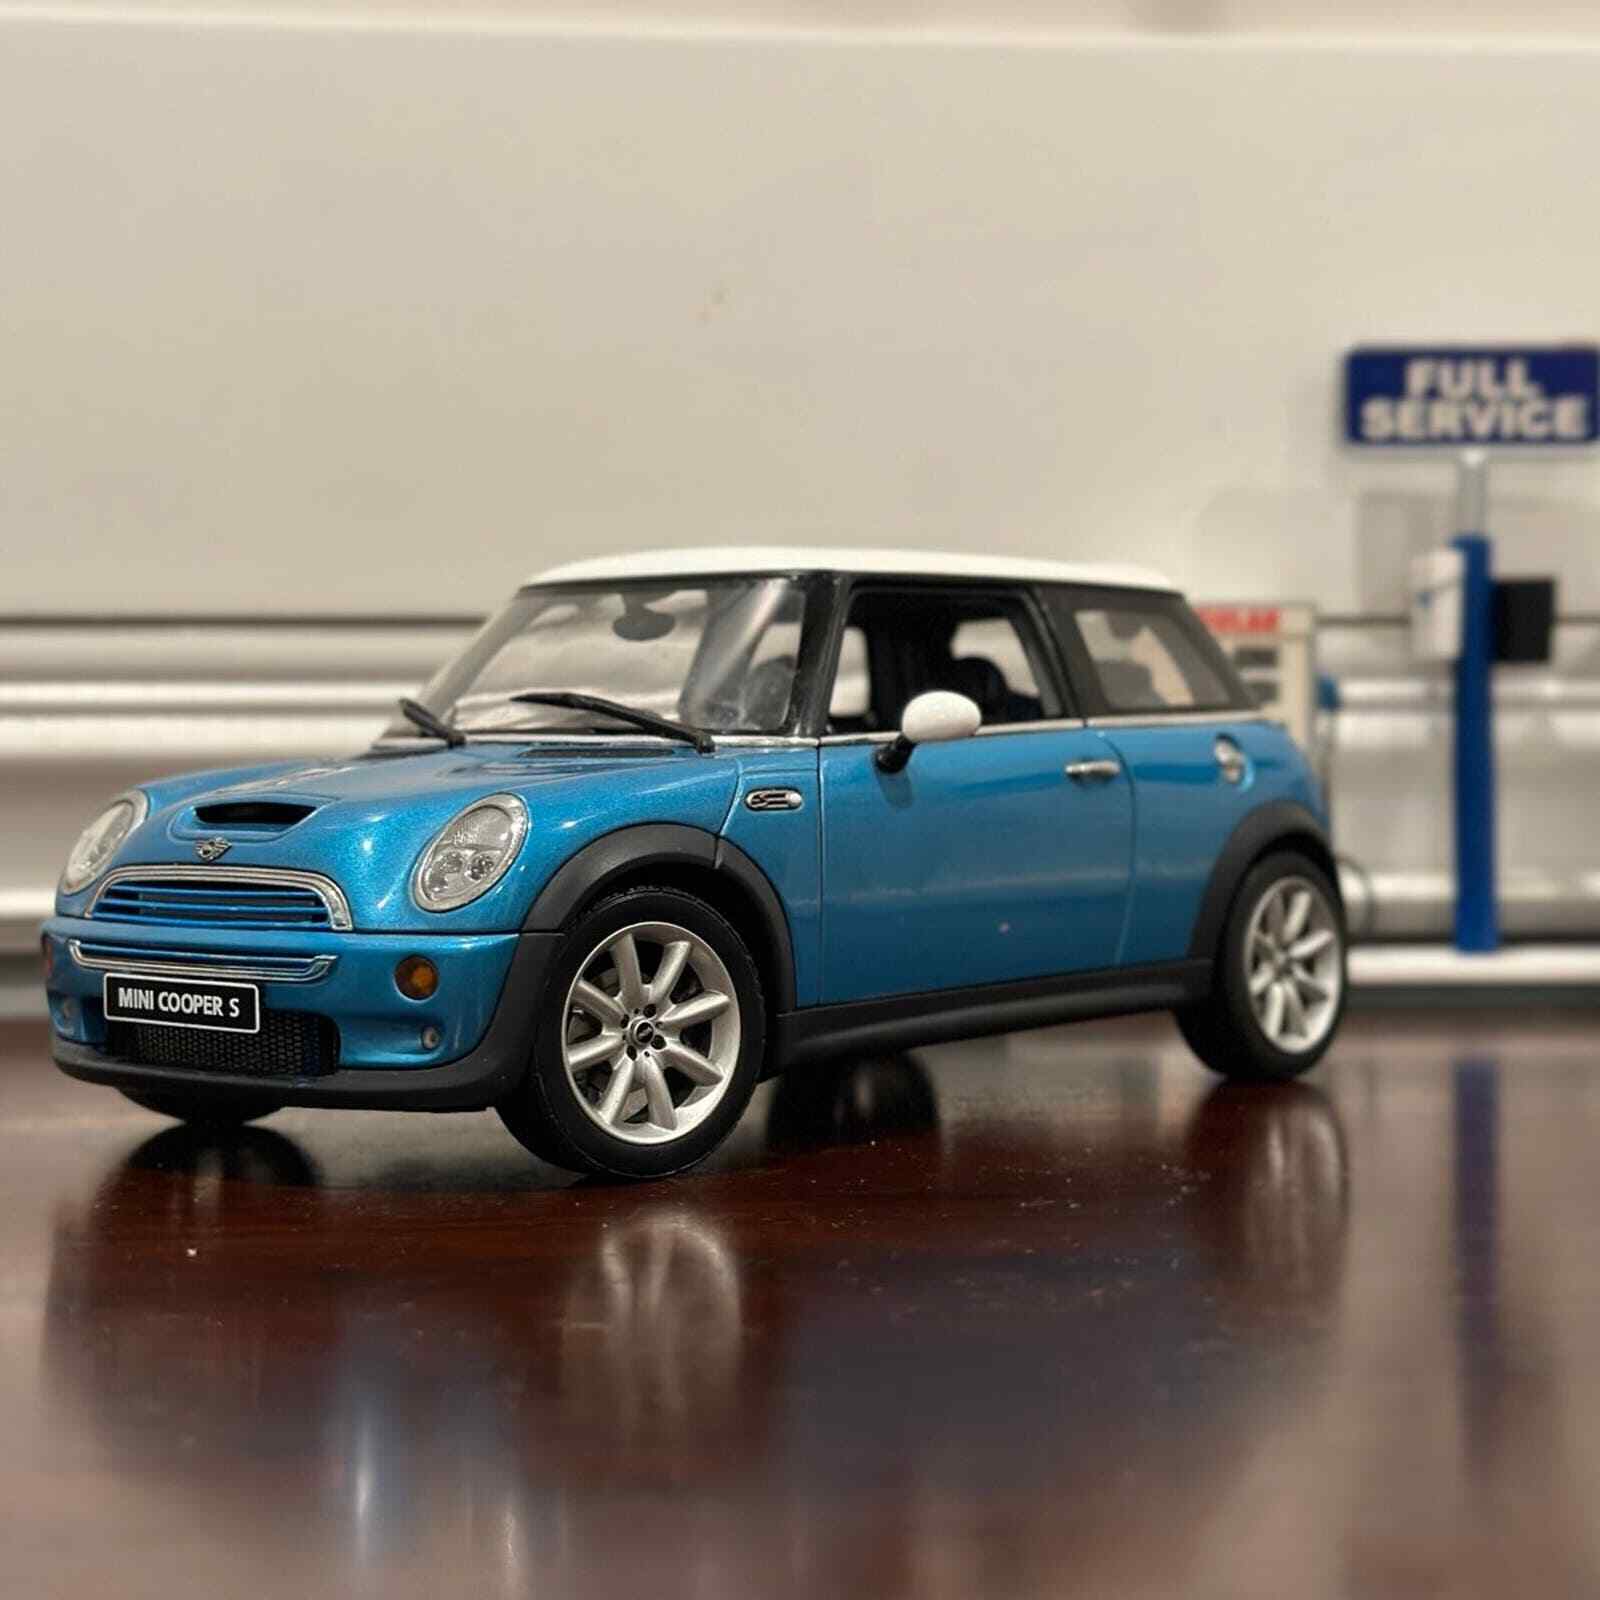 Mini Cooper S 1/18 | Autoart 